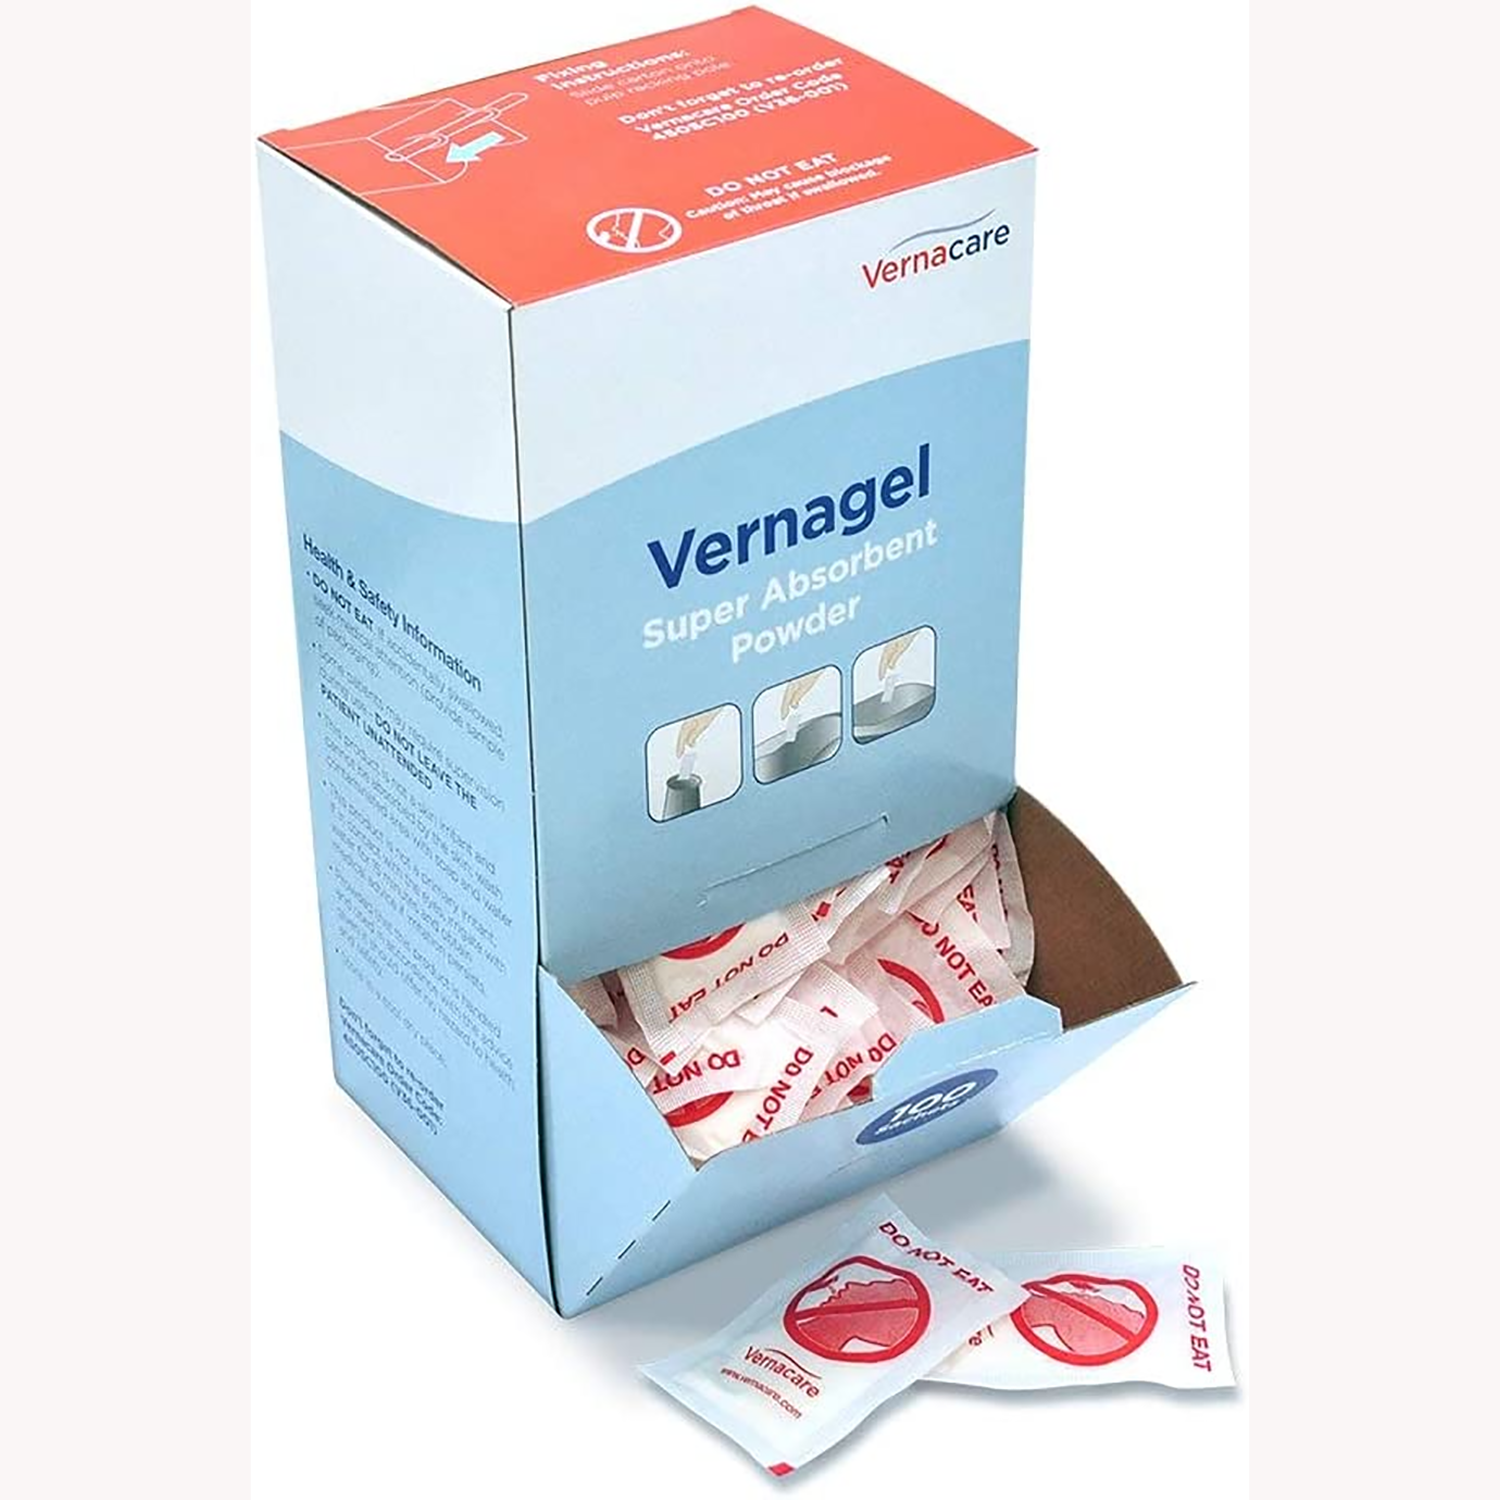 VernaGel Super Absorbent Powder | 100 Sachets